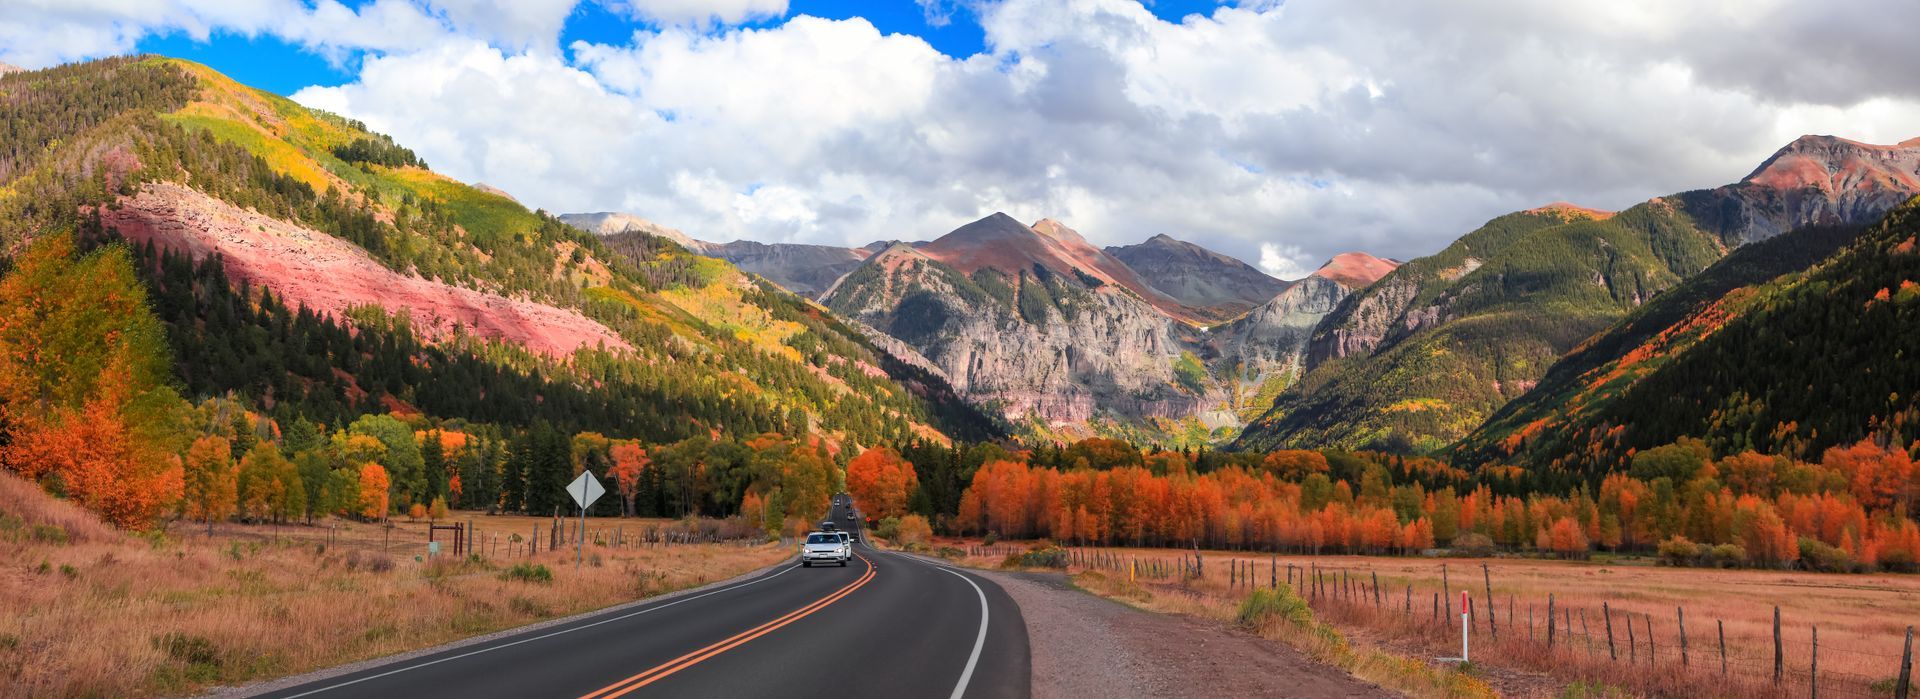 Conquering Colorado Trails? Don't Let Brakes Ruin Your Adventure! | The Garage Automotive Solutions
